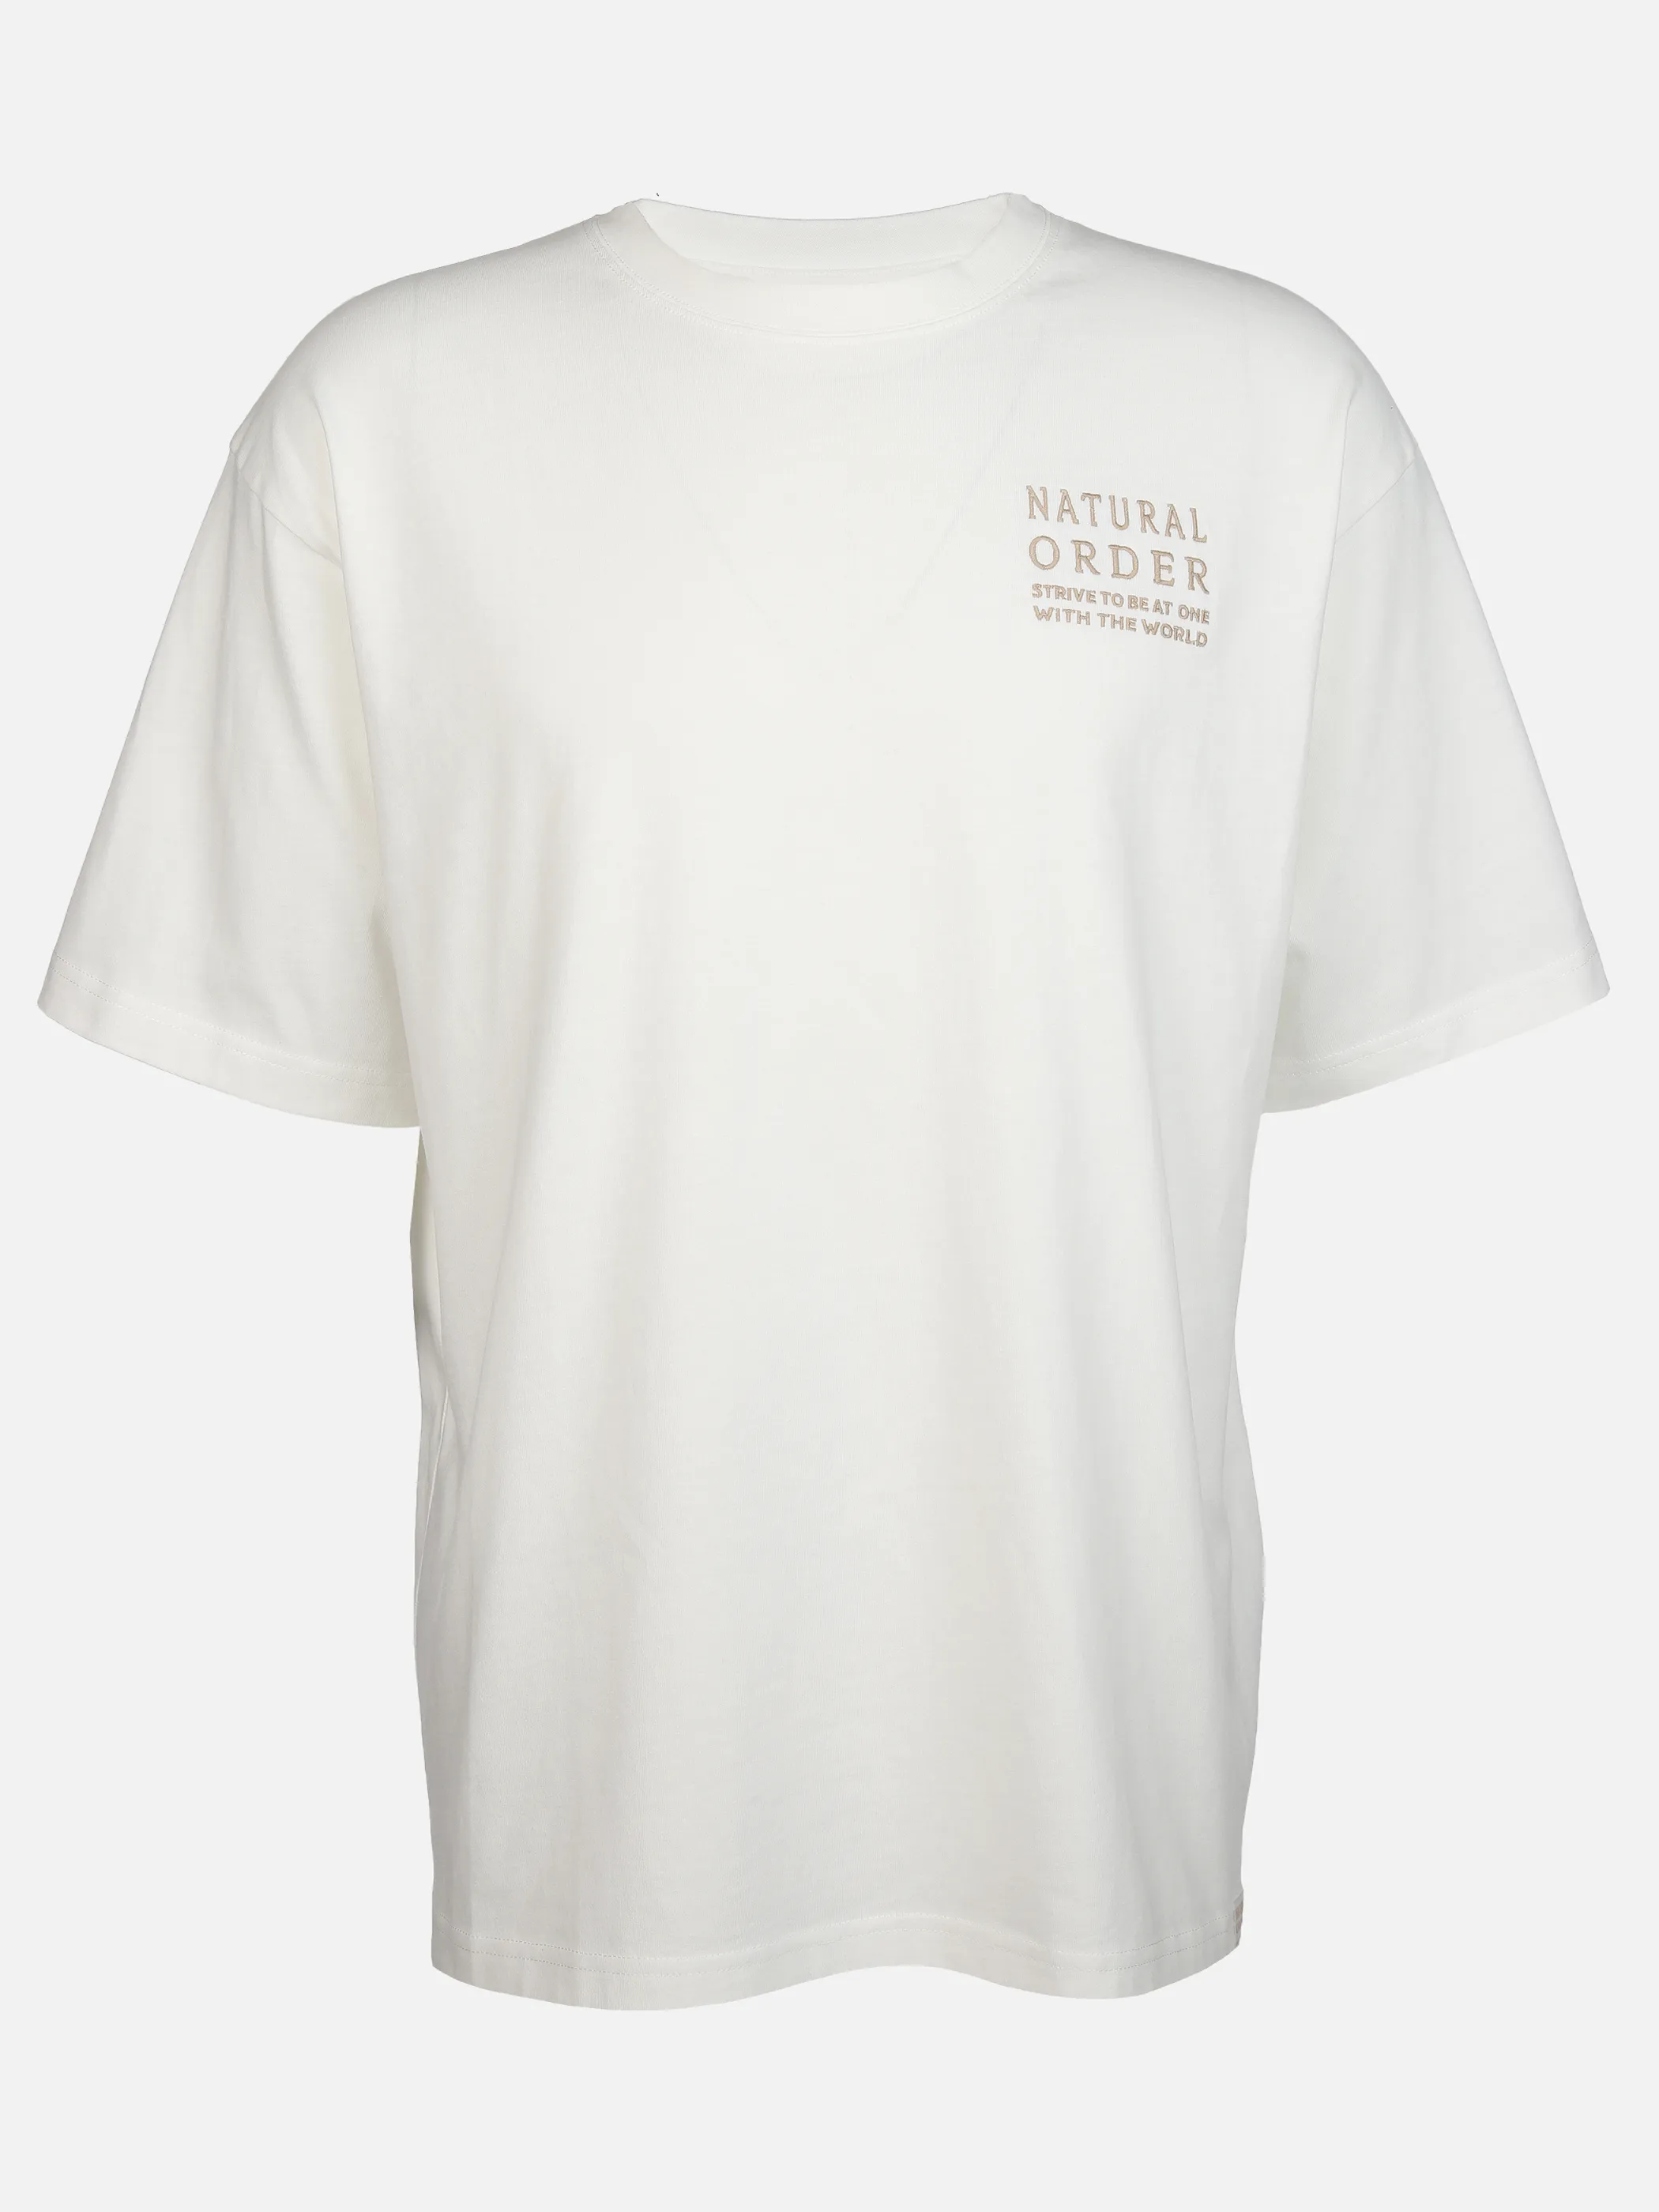 IX-O YF-He- T-Shirt Relaxed Fit Weiß 891818 OFFWHITE 1